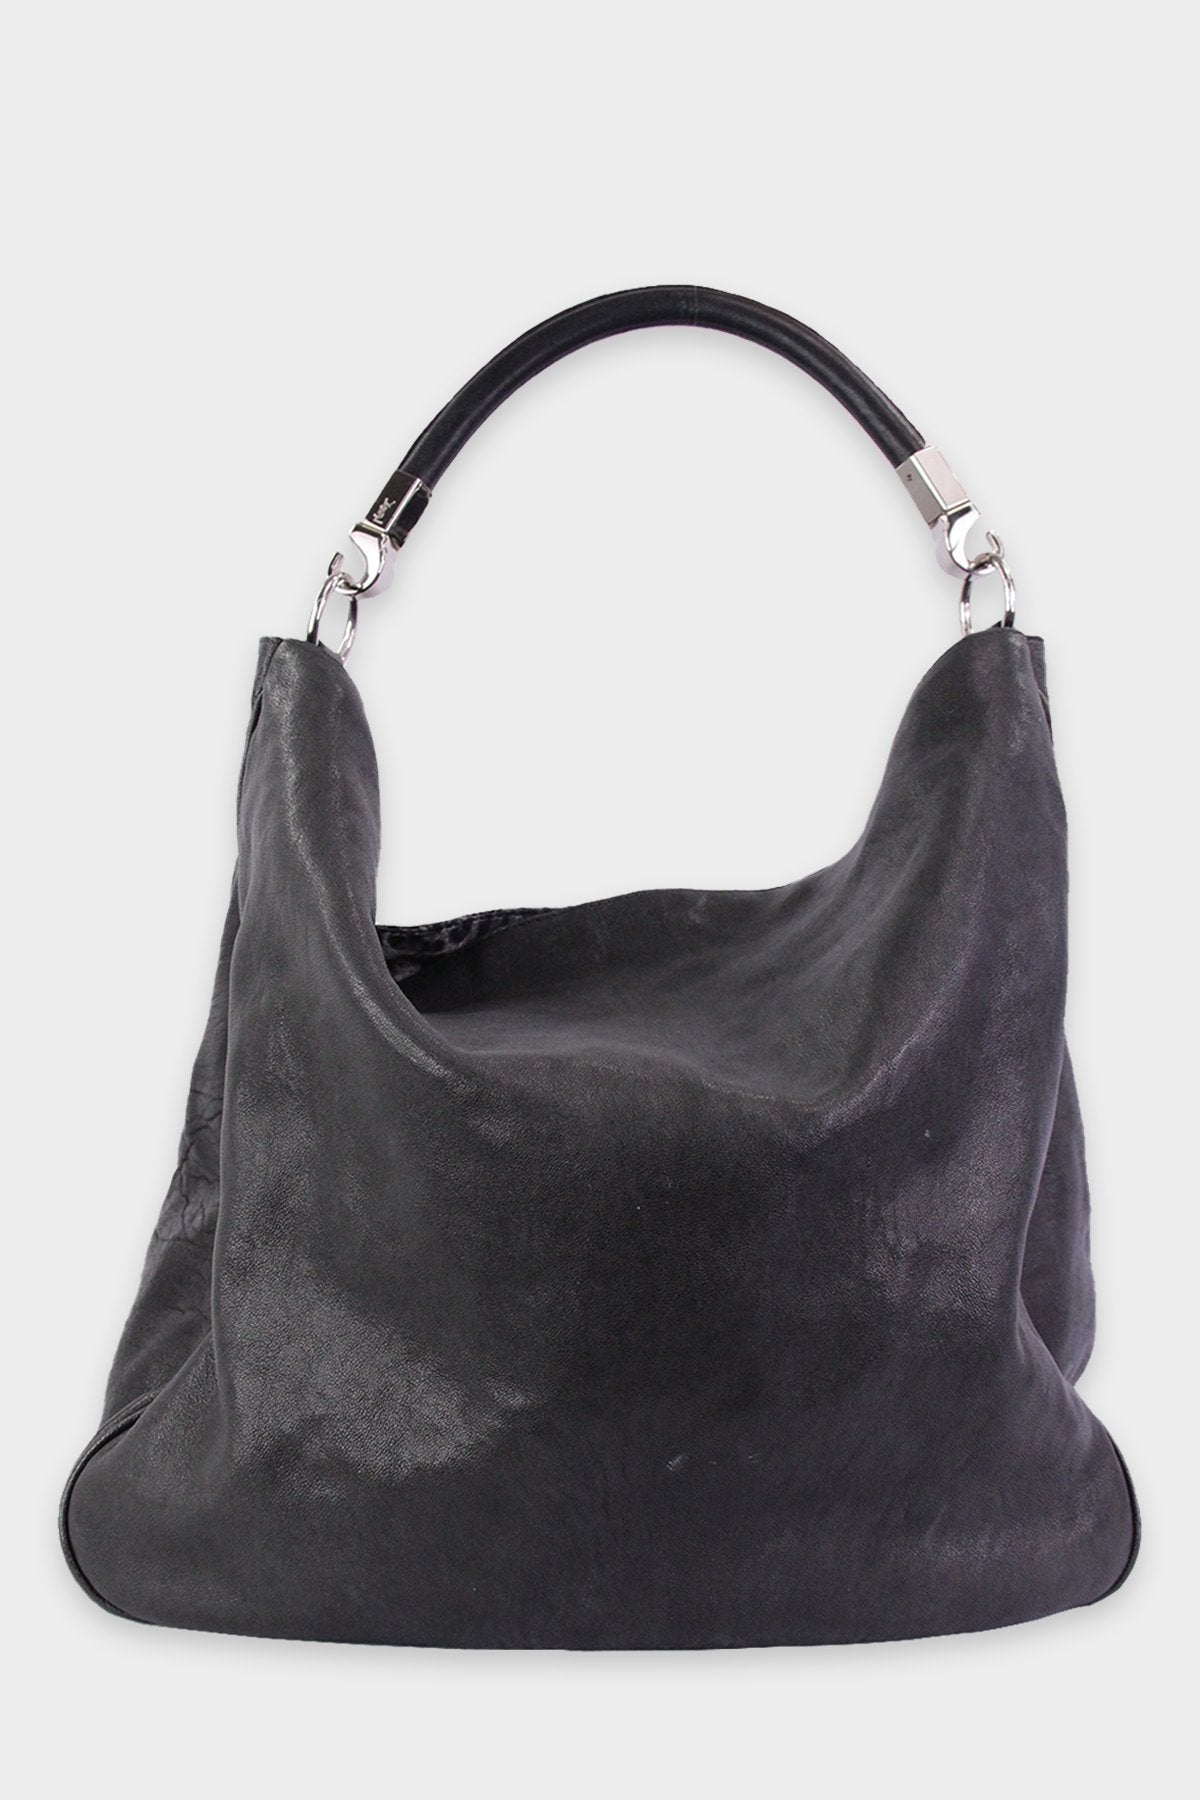 Saint Laurent Black Leather Hobo Handbag with Leopard Print in the Interior - shop-olivia.com